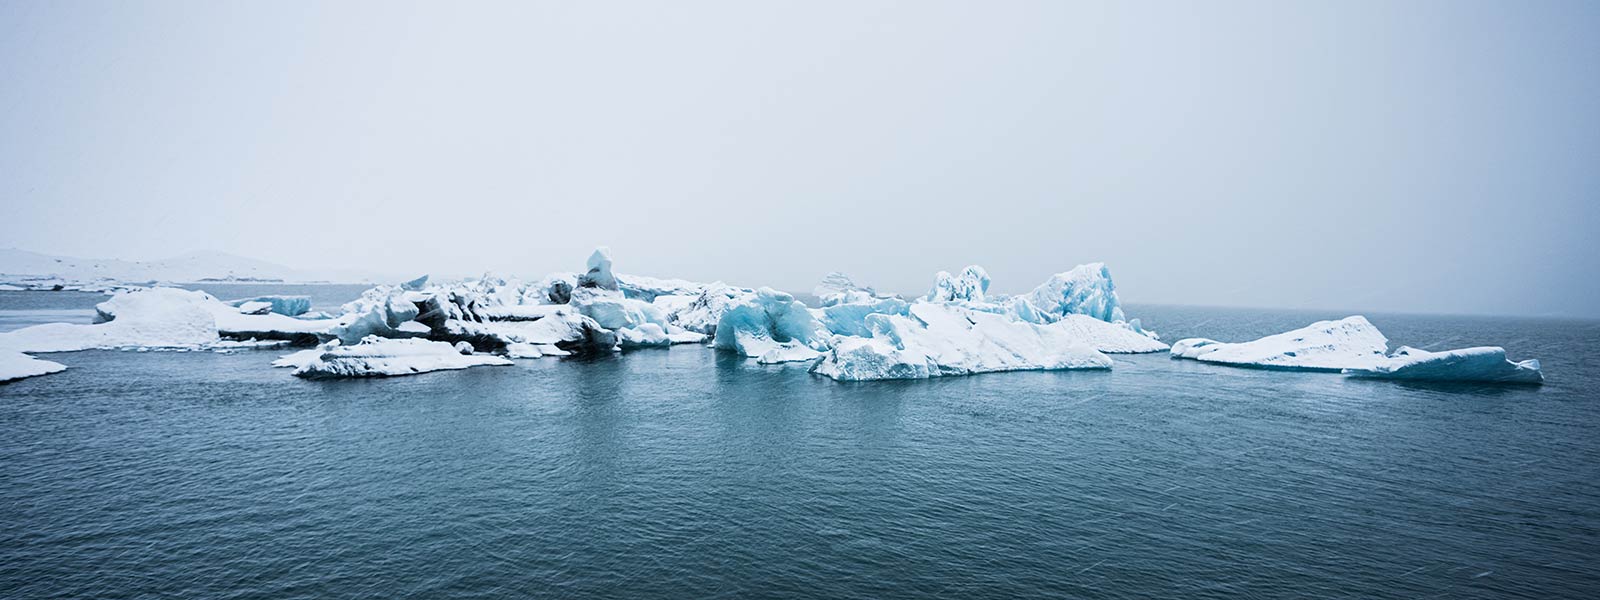 Icebergs at Diamond Beach in Iceland. Waking up in a winter wonderland